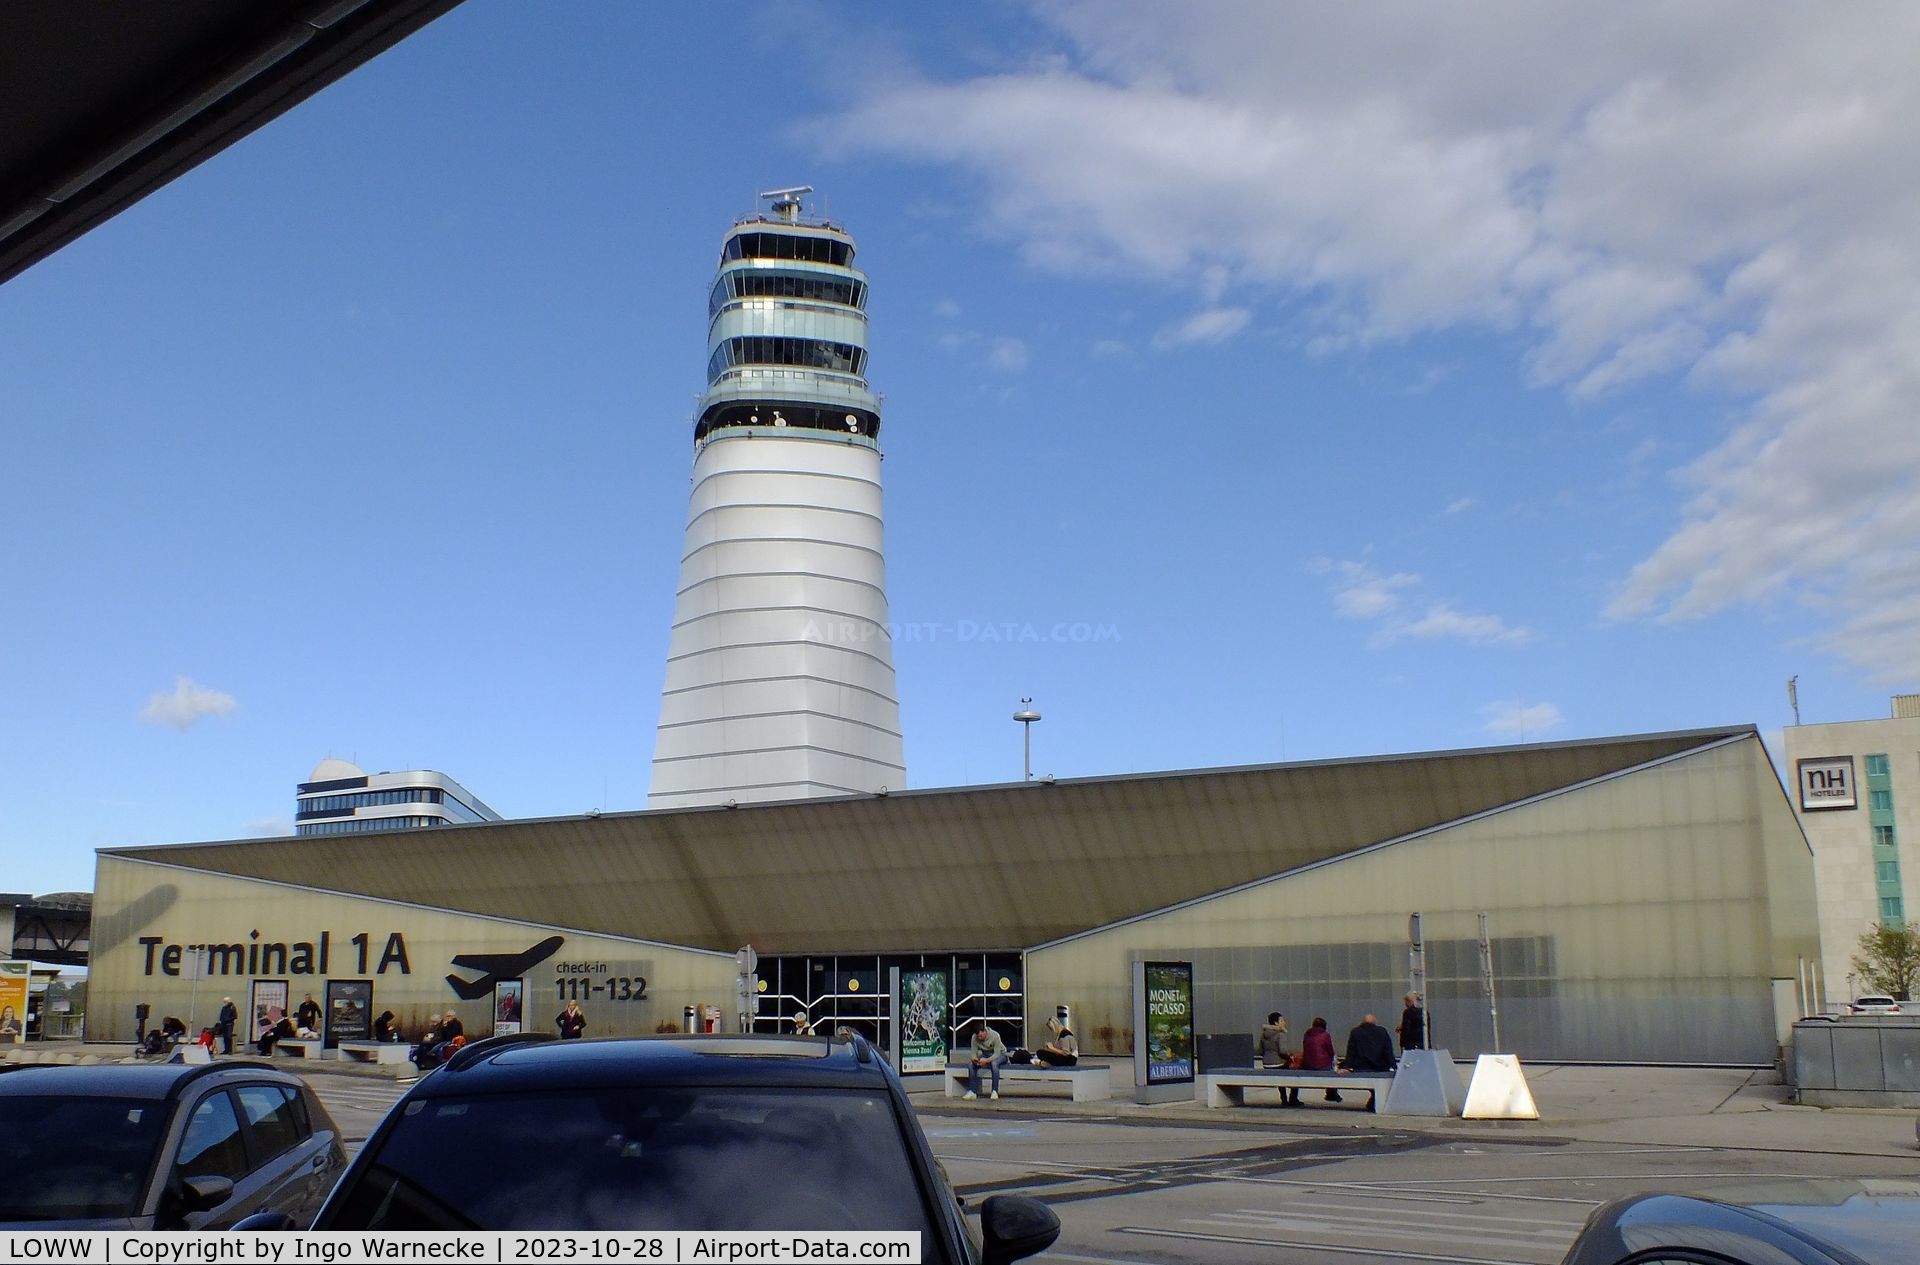 Vienna International Airport, Vienna Austria (LOWW) - terminal 1A and tower at Wien airport